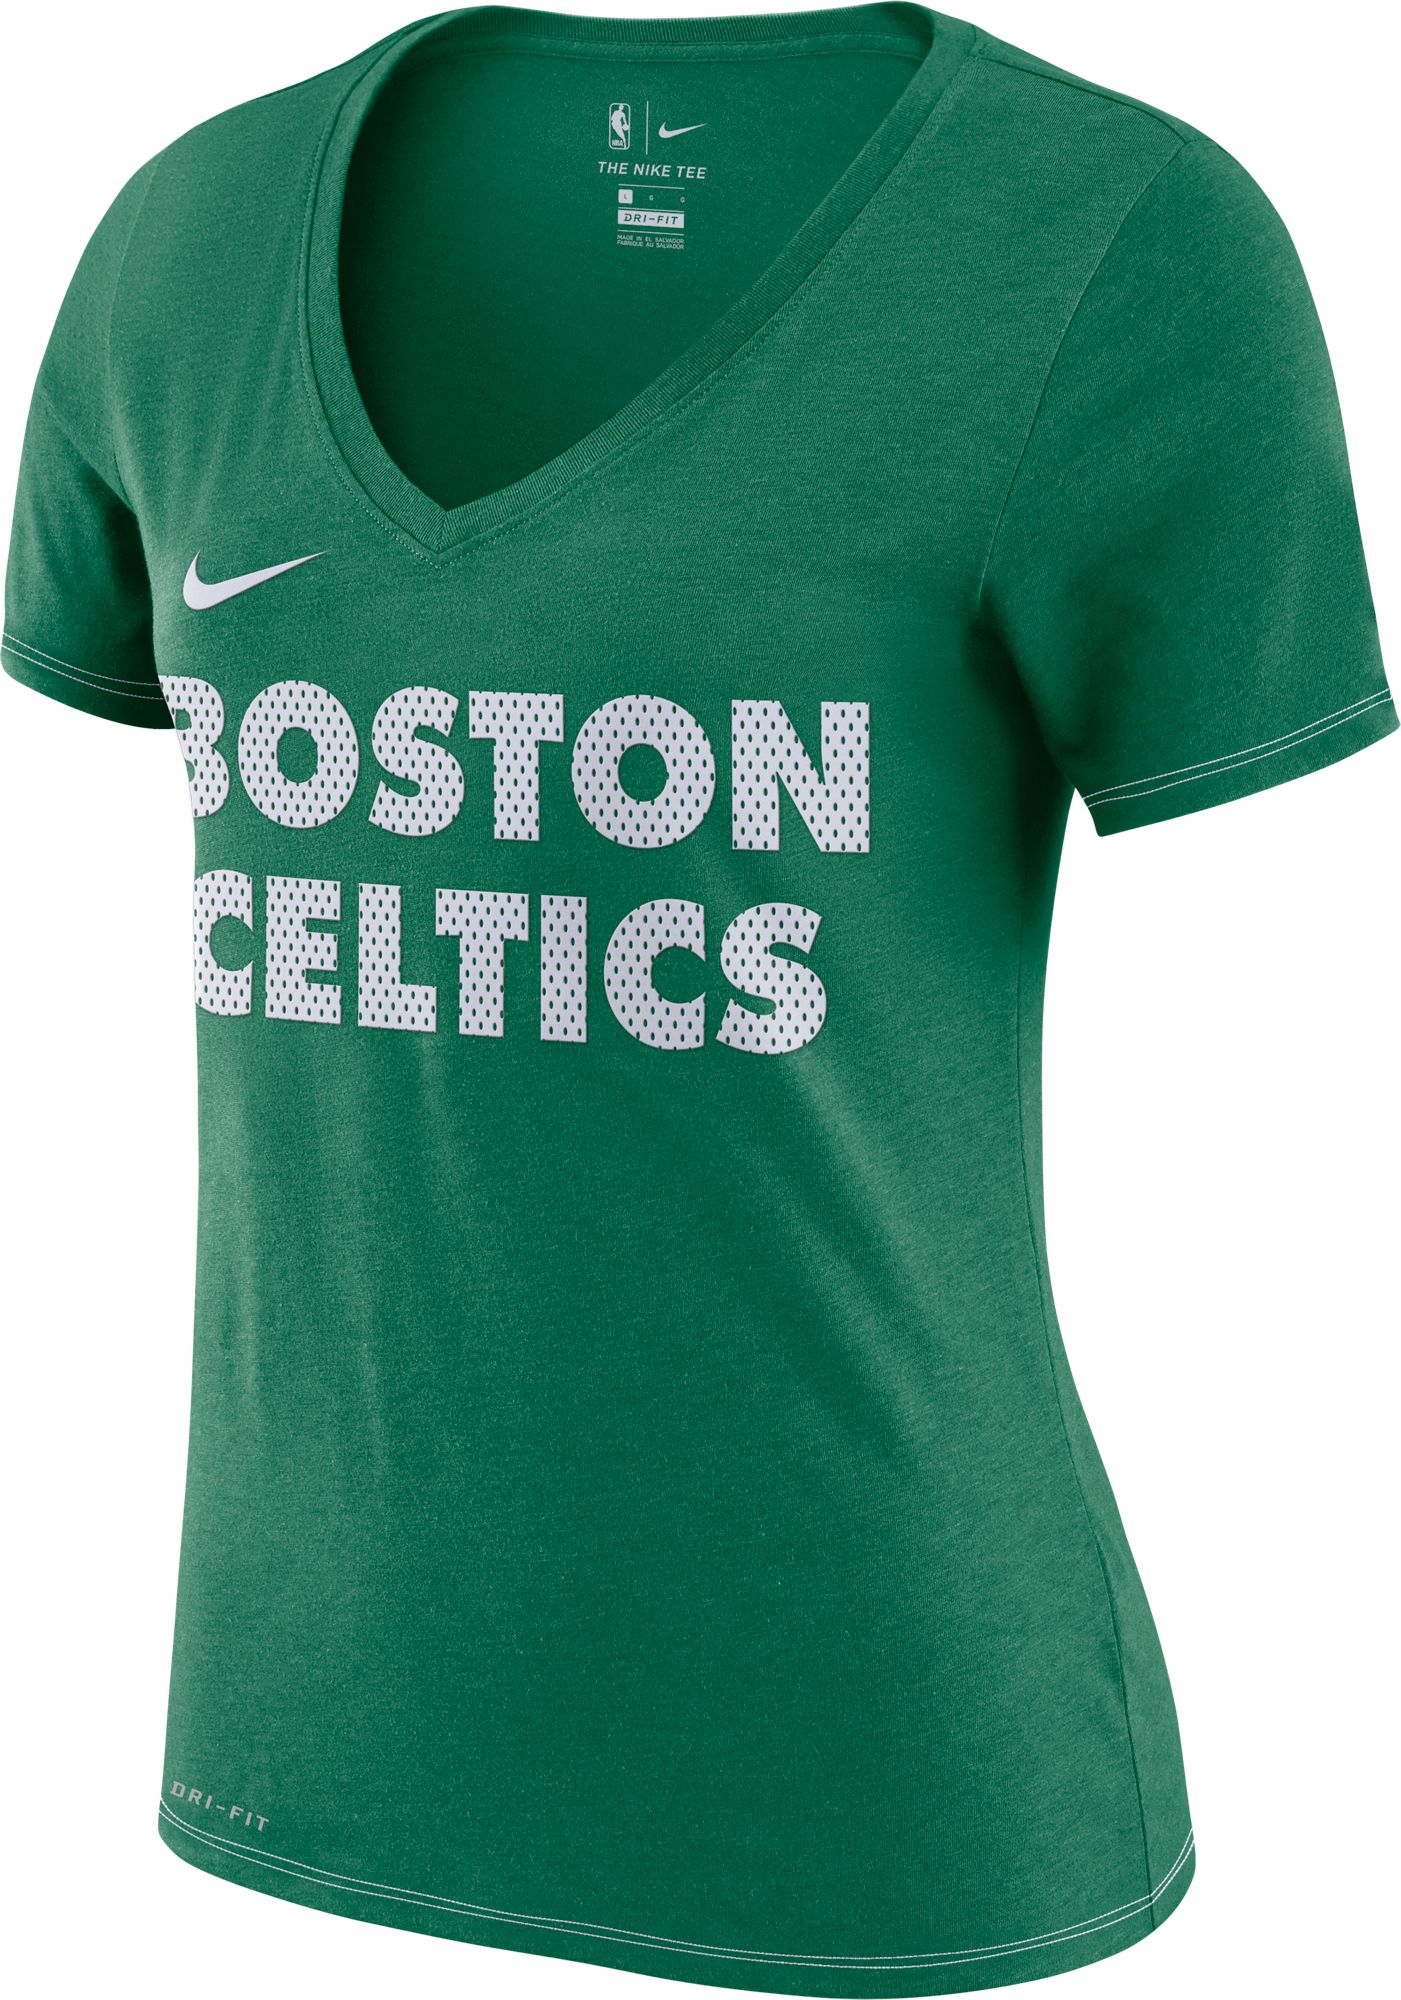 boston celtics women's apparel